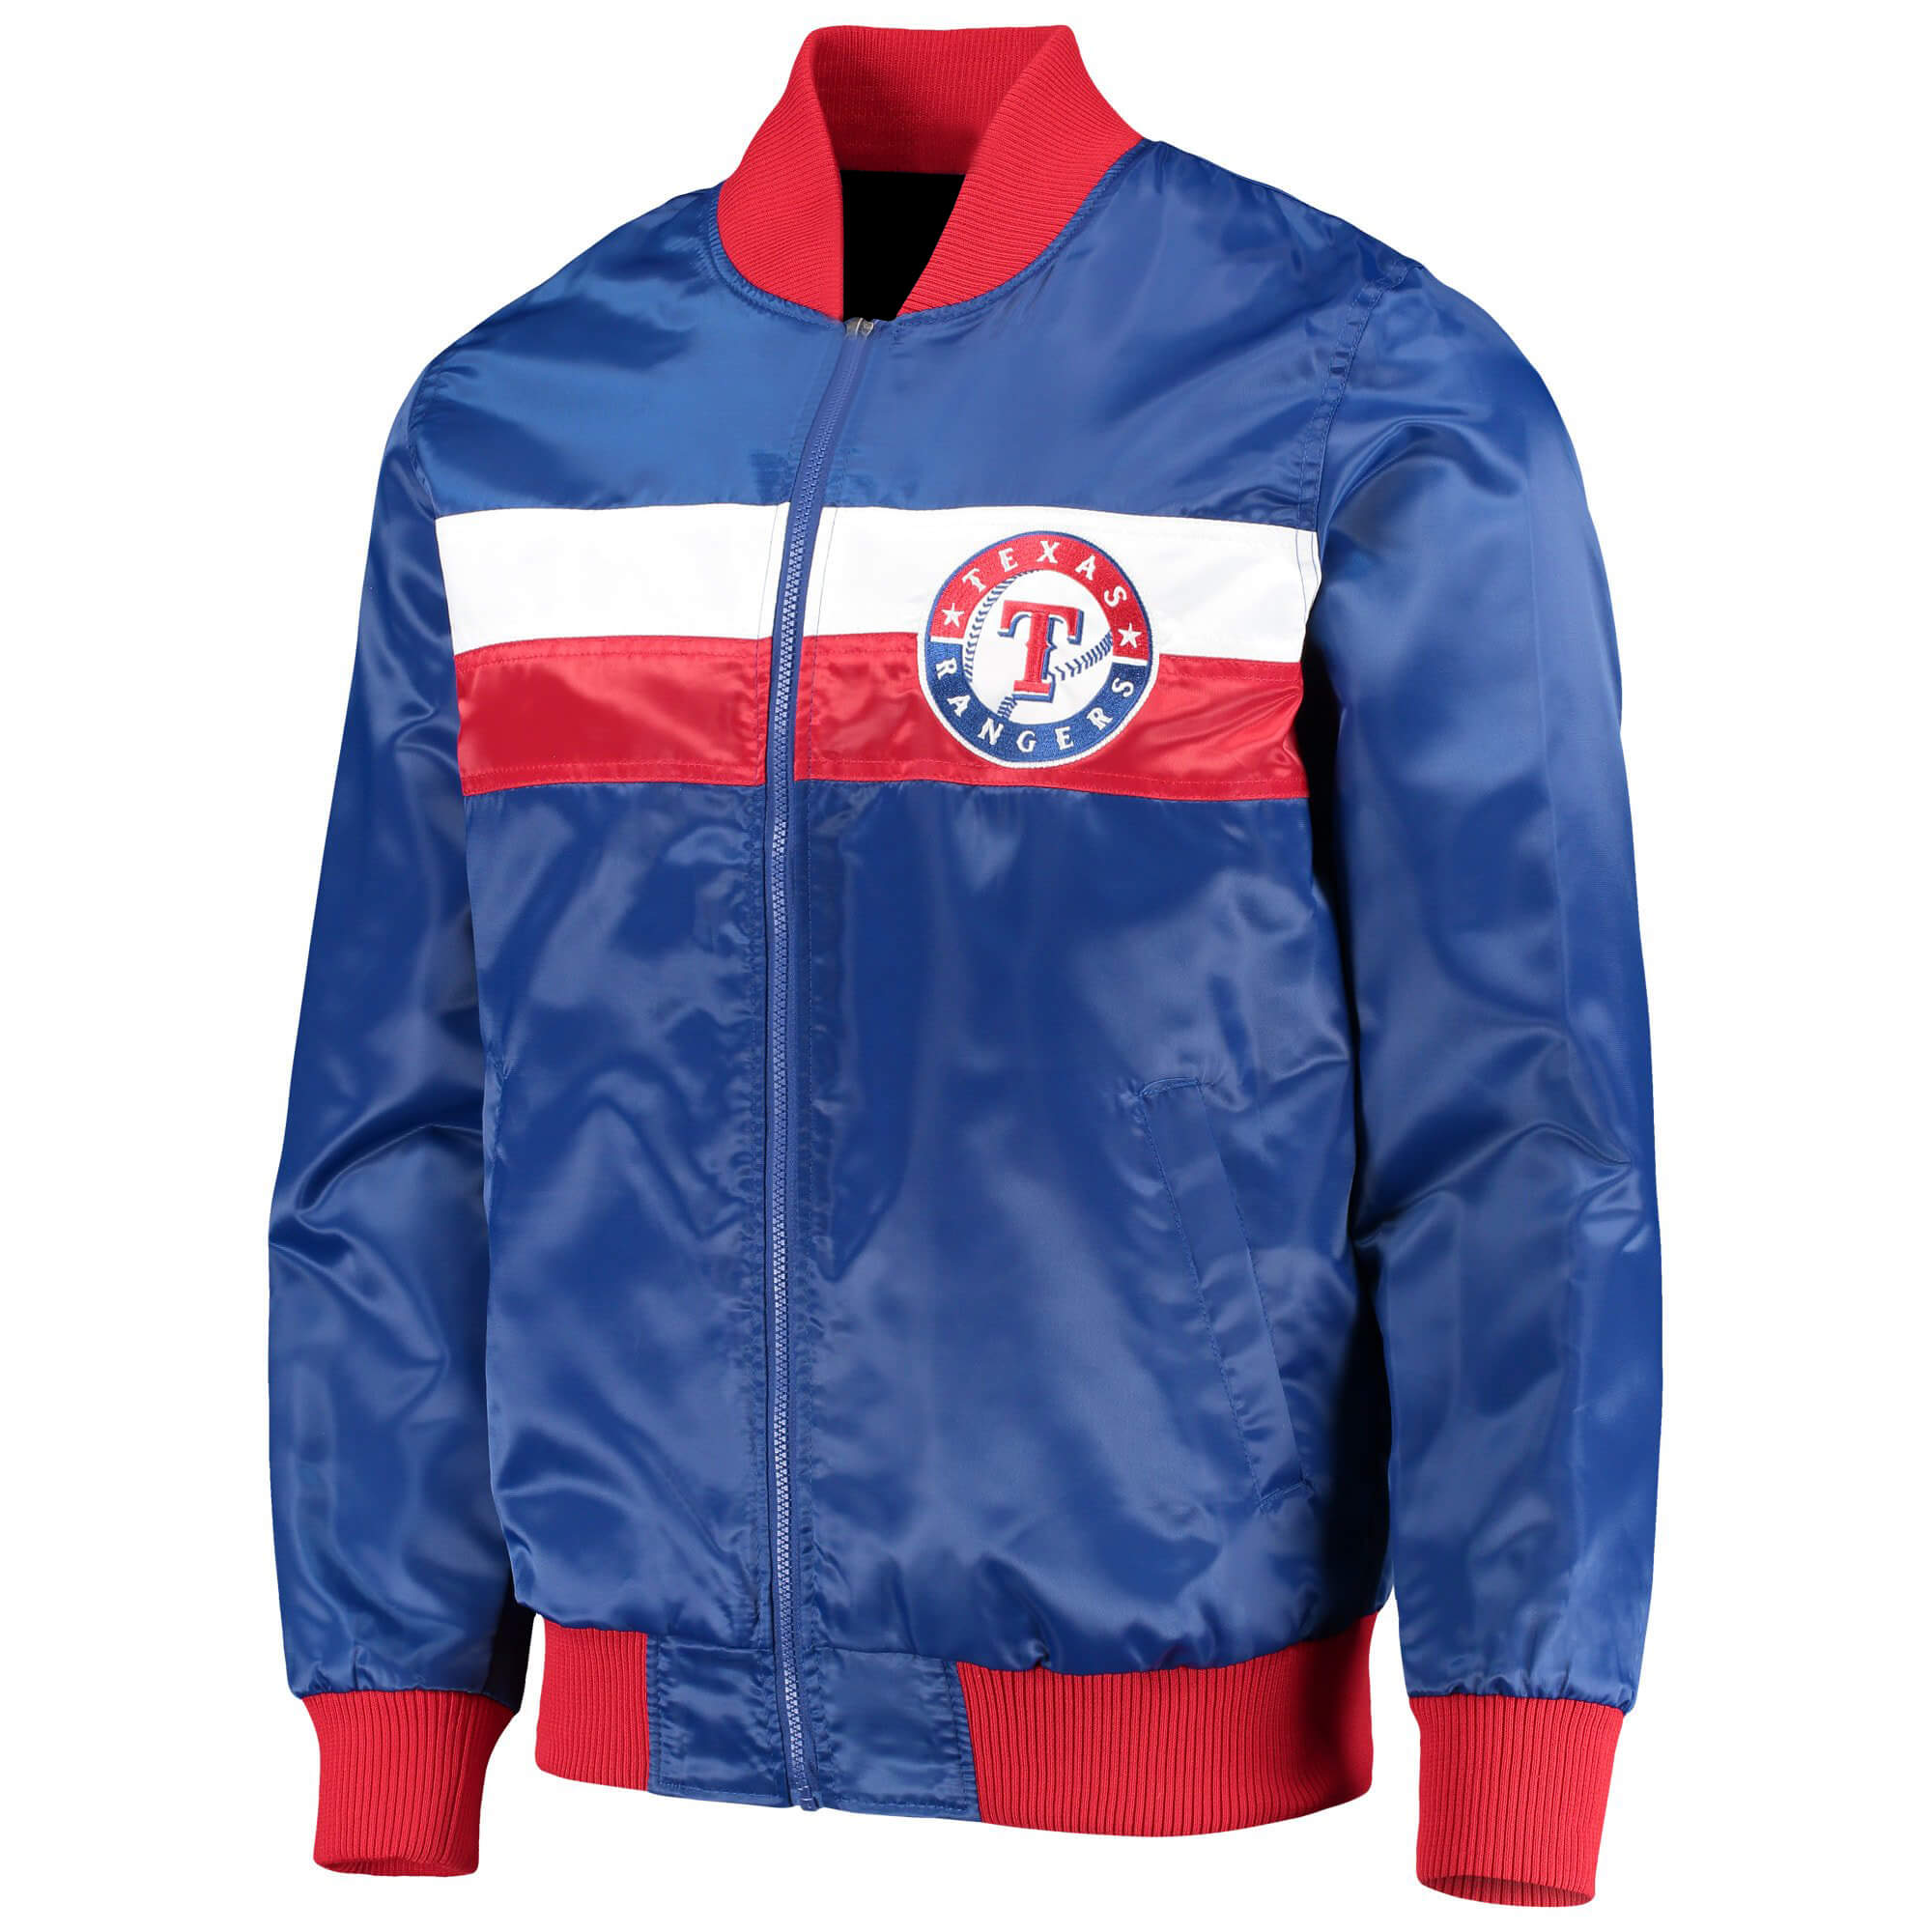 Maker of Jacket Sports Leagues Jackets MLB Texas Rangers Royal Blue Wool